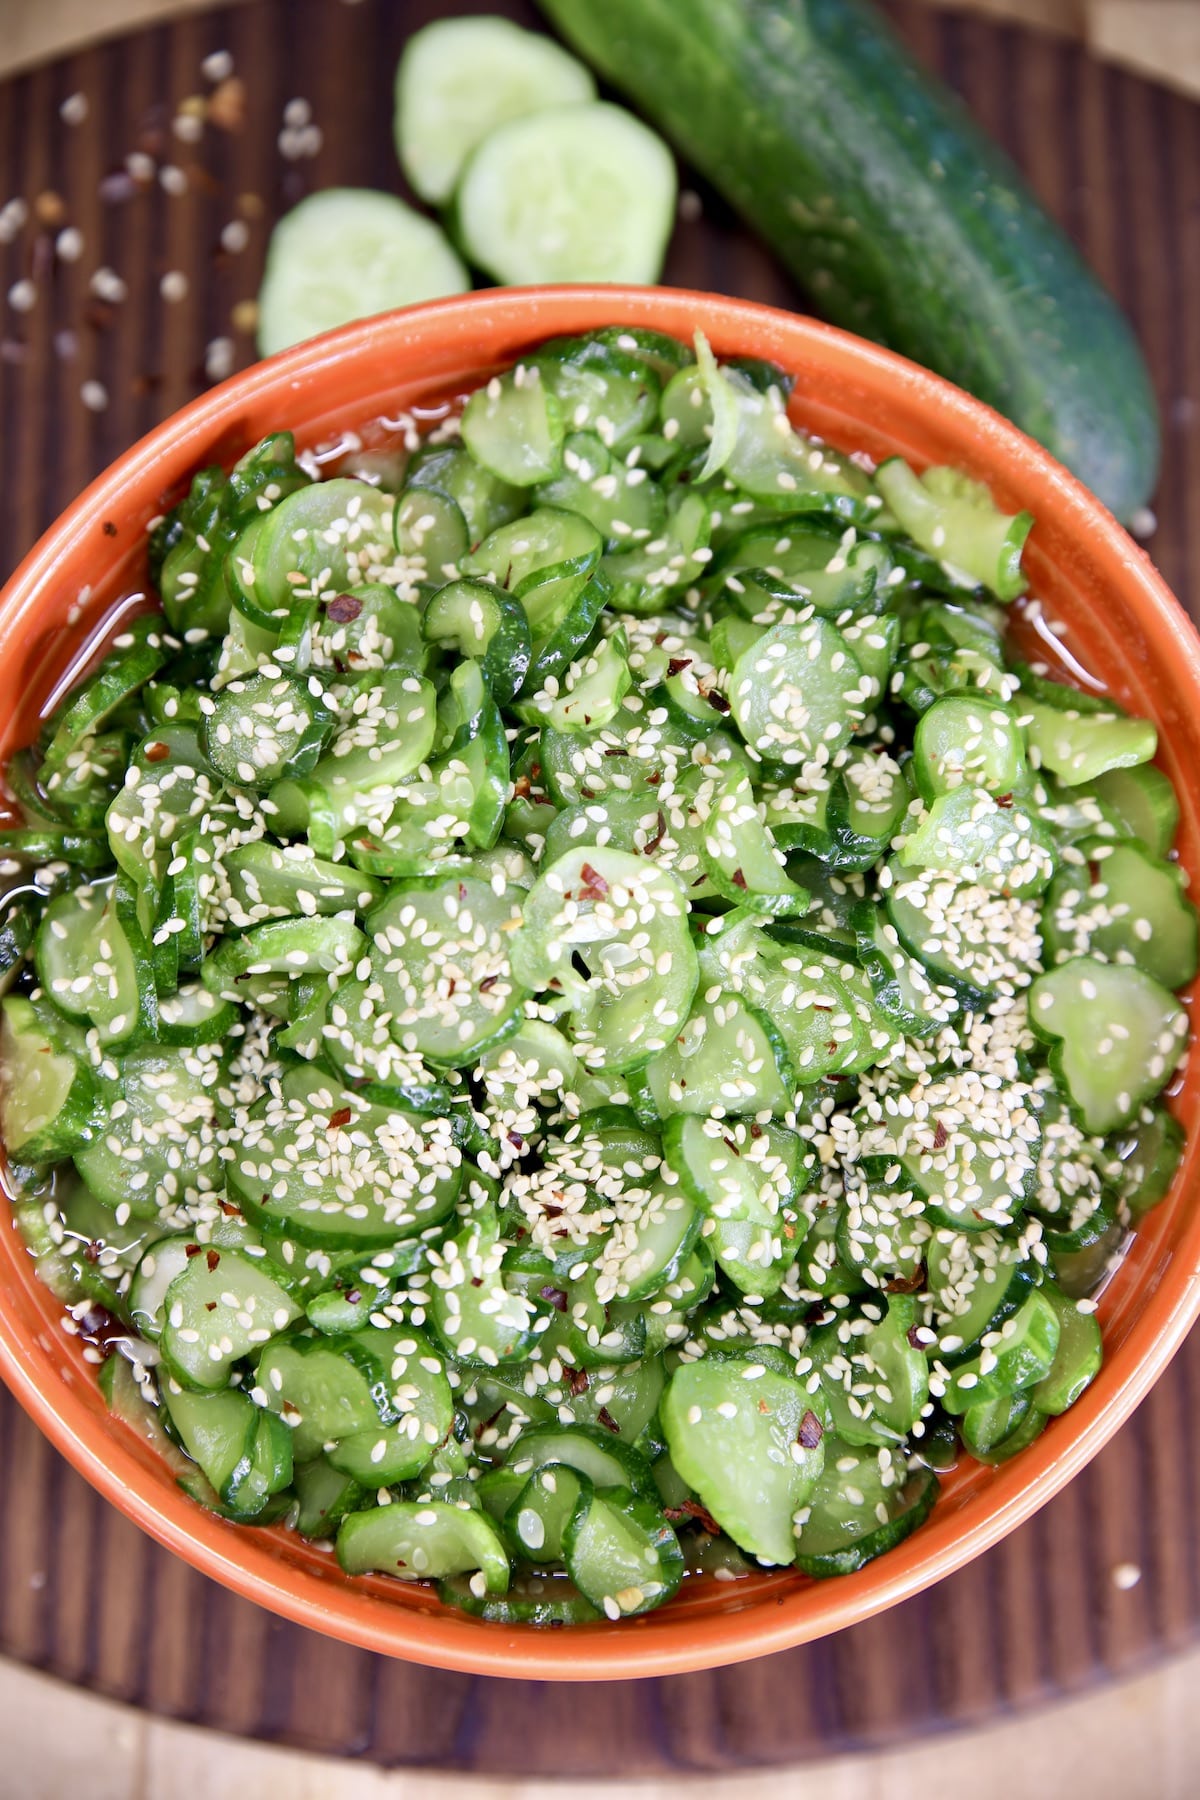 Cucumber Salad with Asian sesame dressing.